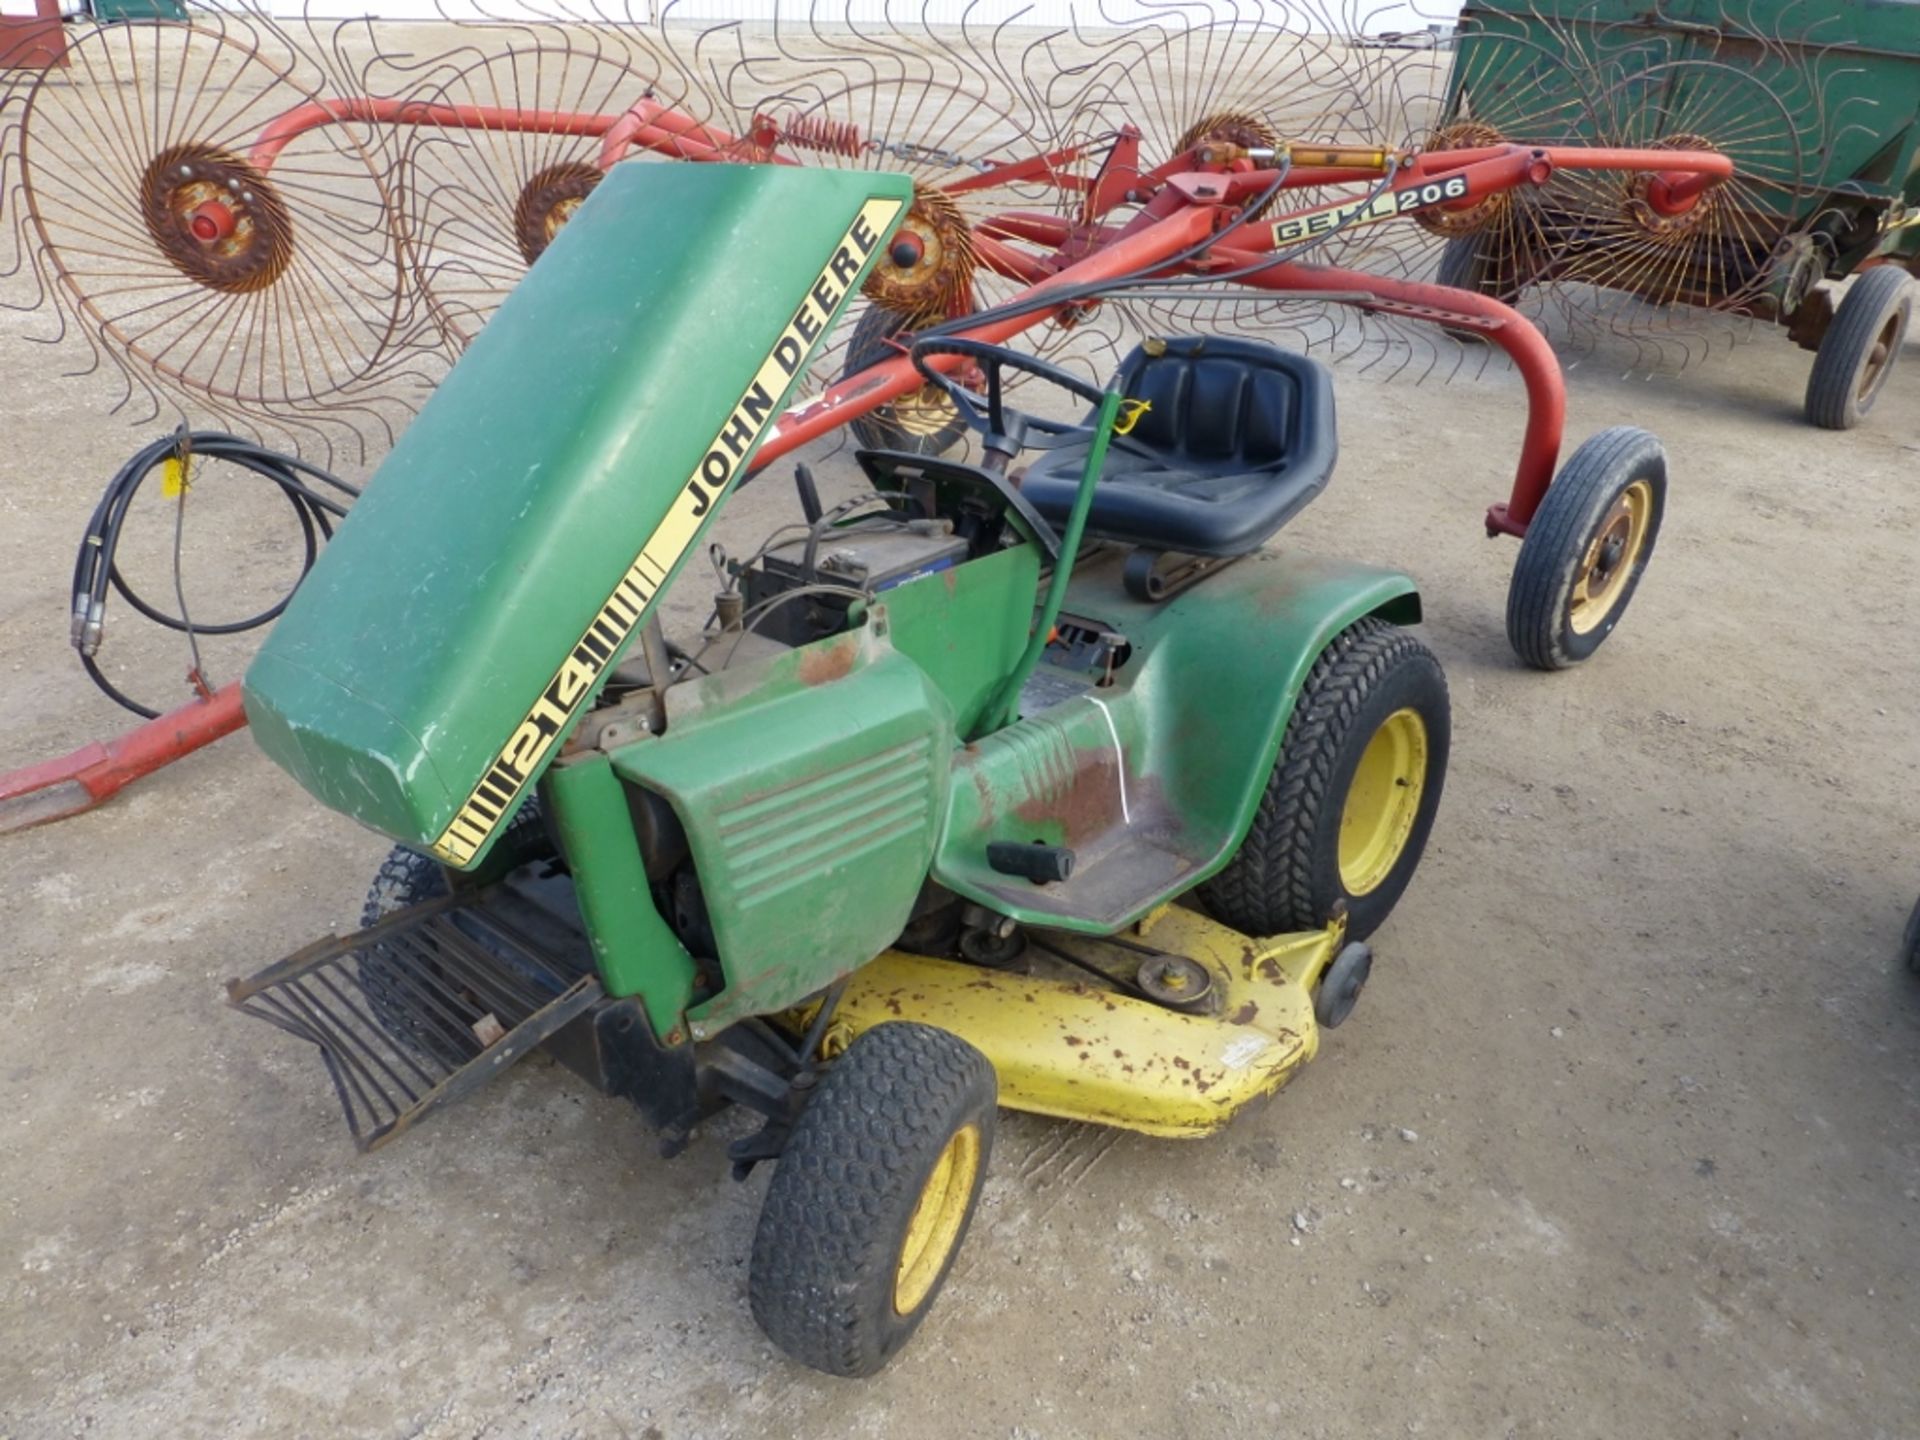 John Deere 214 lawnmower, Kohler 14 hp, 42" cut